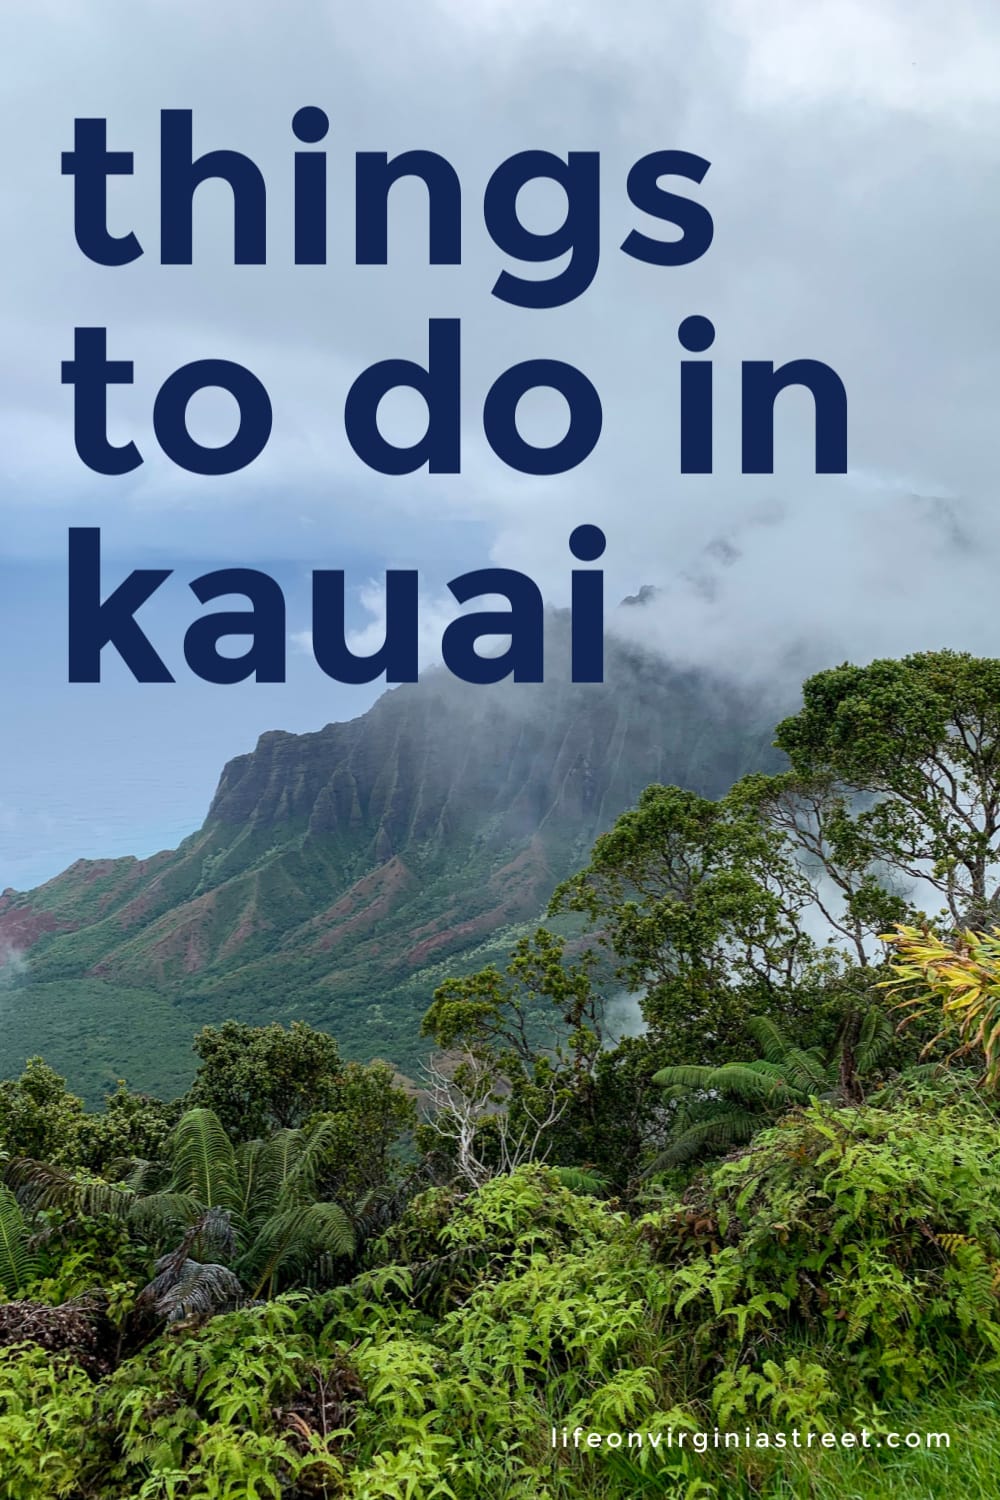 Things To Do In Kauai Life On Virginia Street